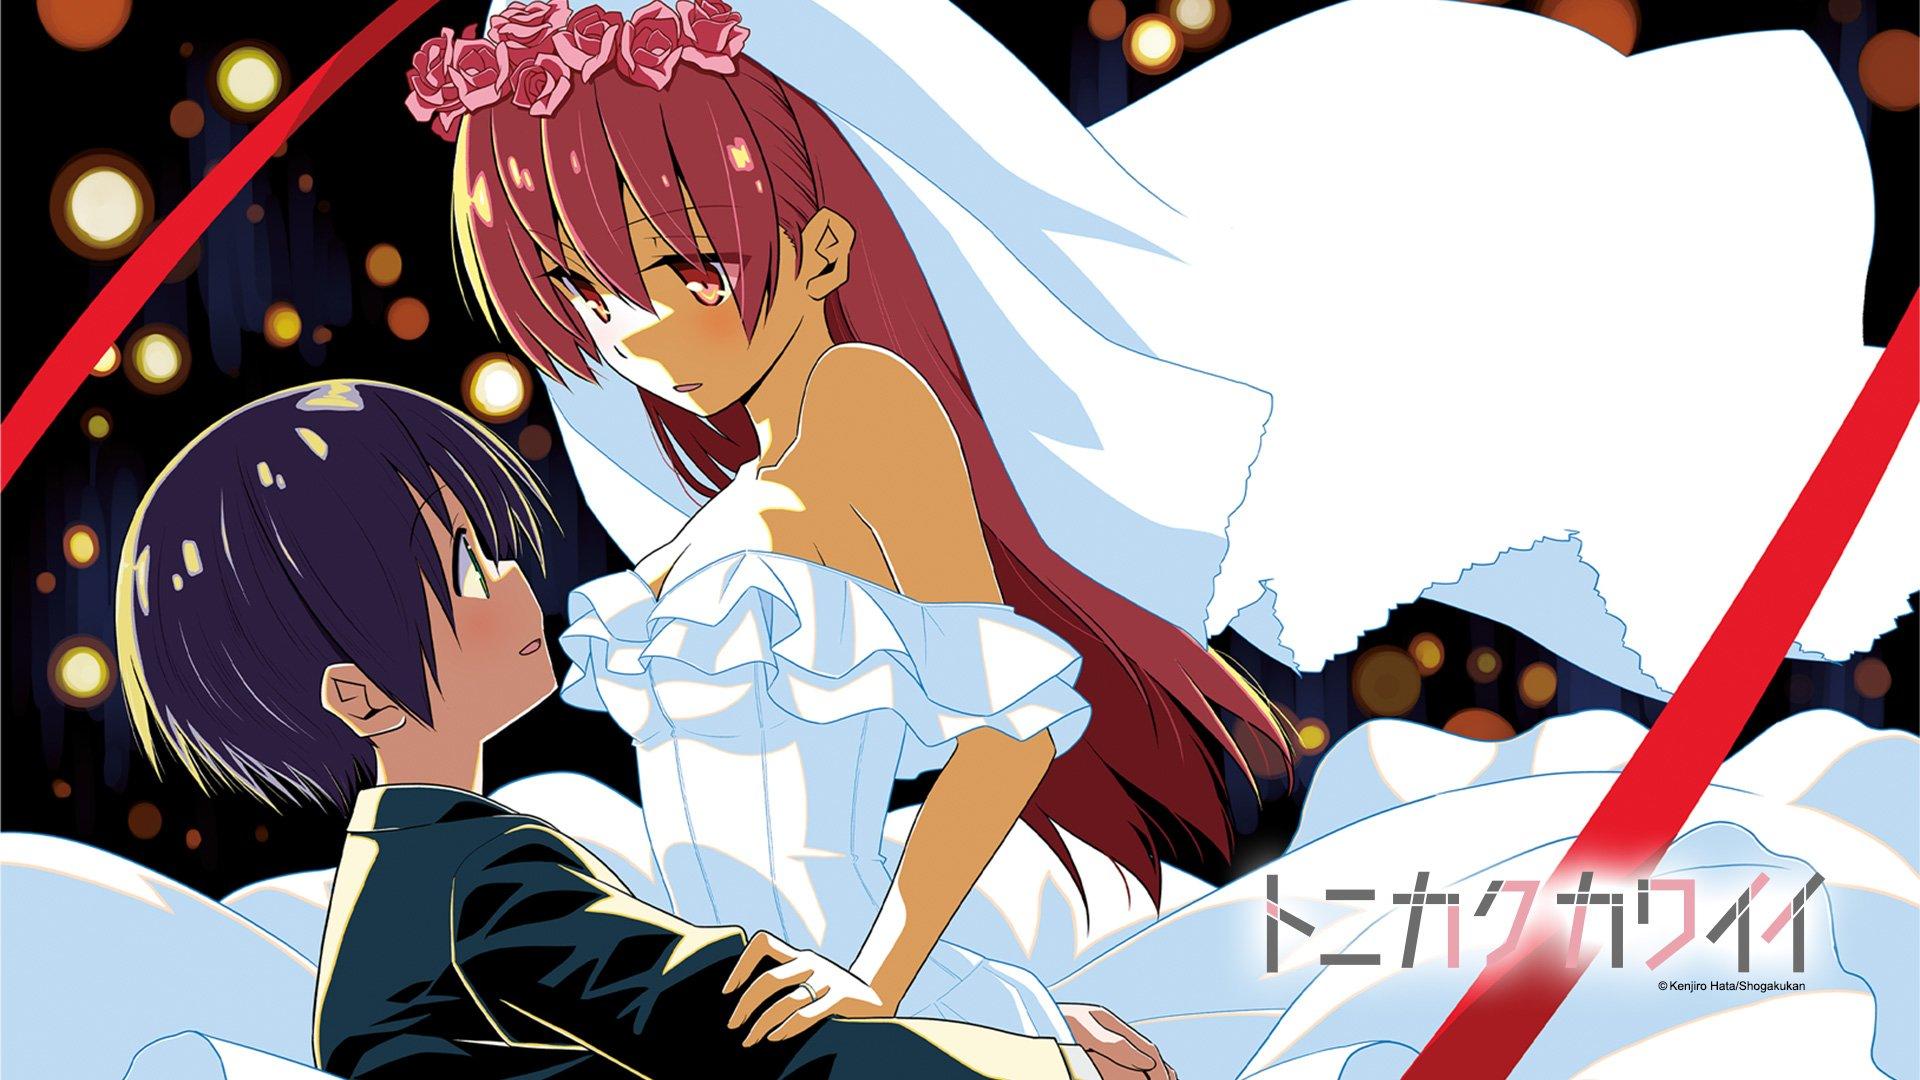 Bizarre love story anime similar to Hrimiya, TONIKAWA: Over the Moon For You